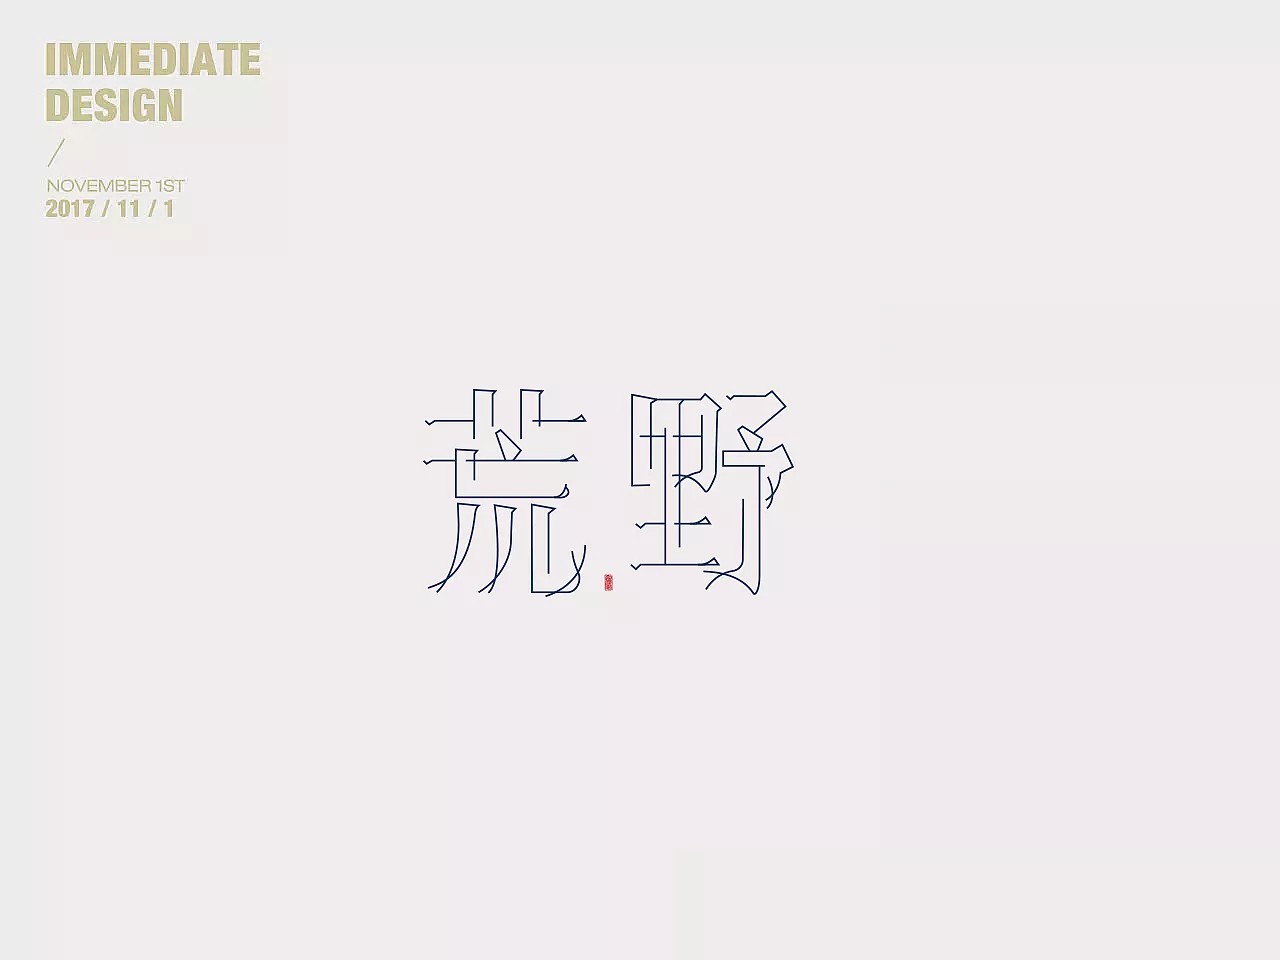 11P Creative Chinese font logo design scheme #.201